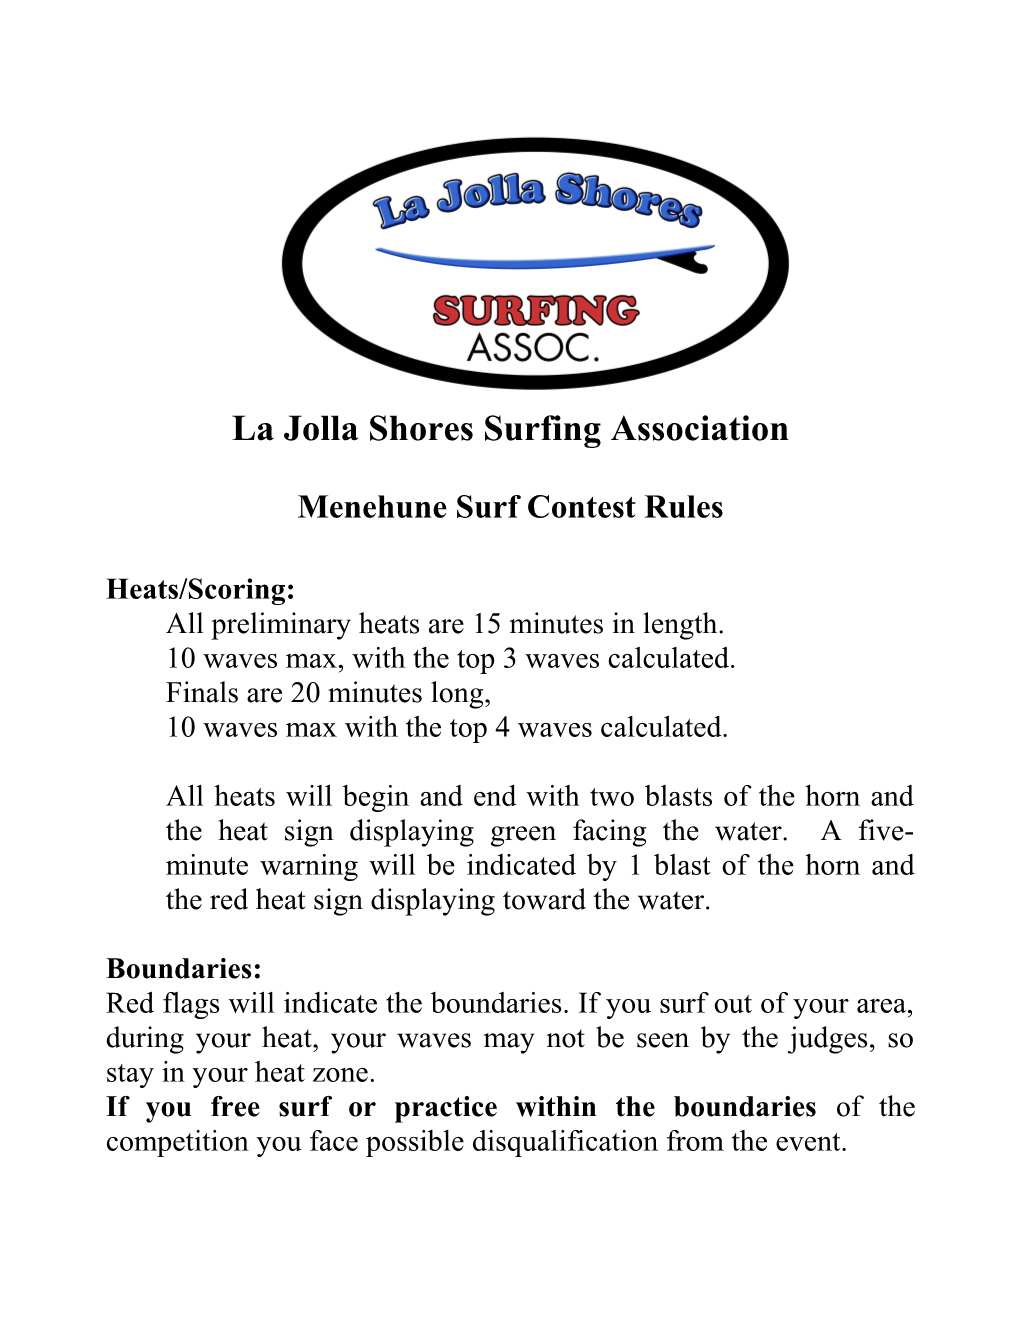 La Jolla Shores Surfing Association